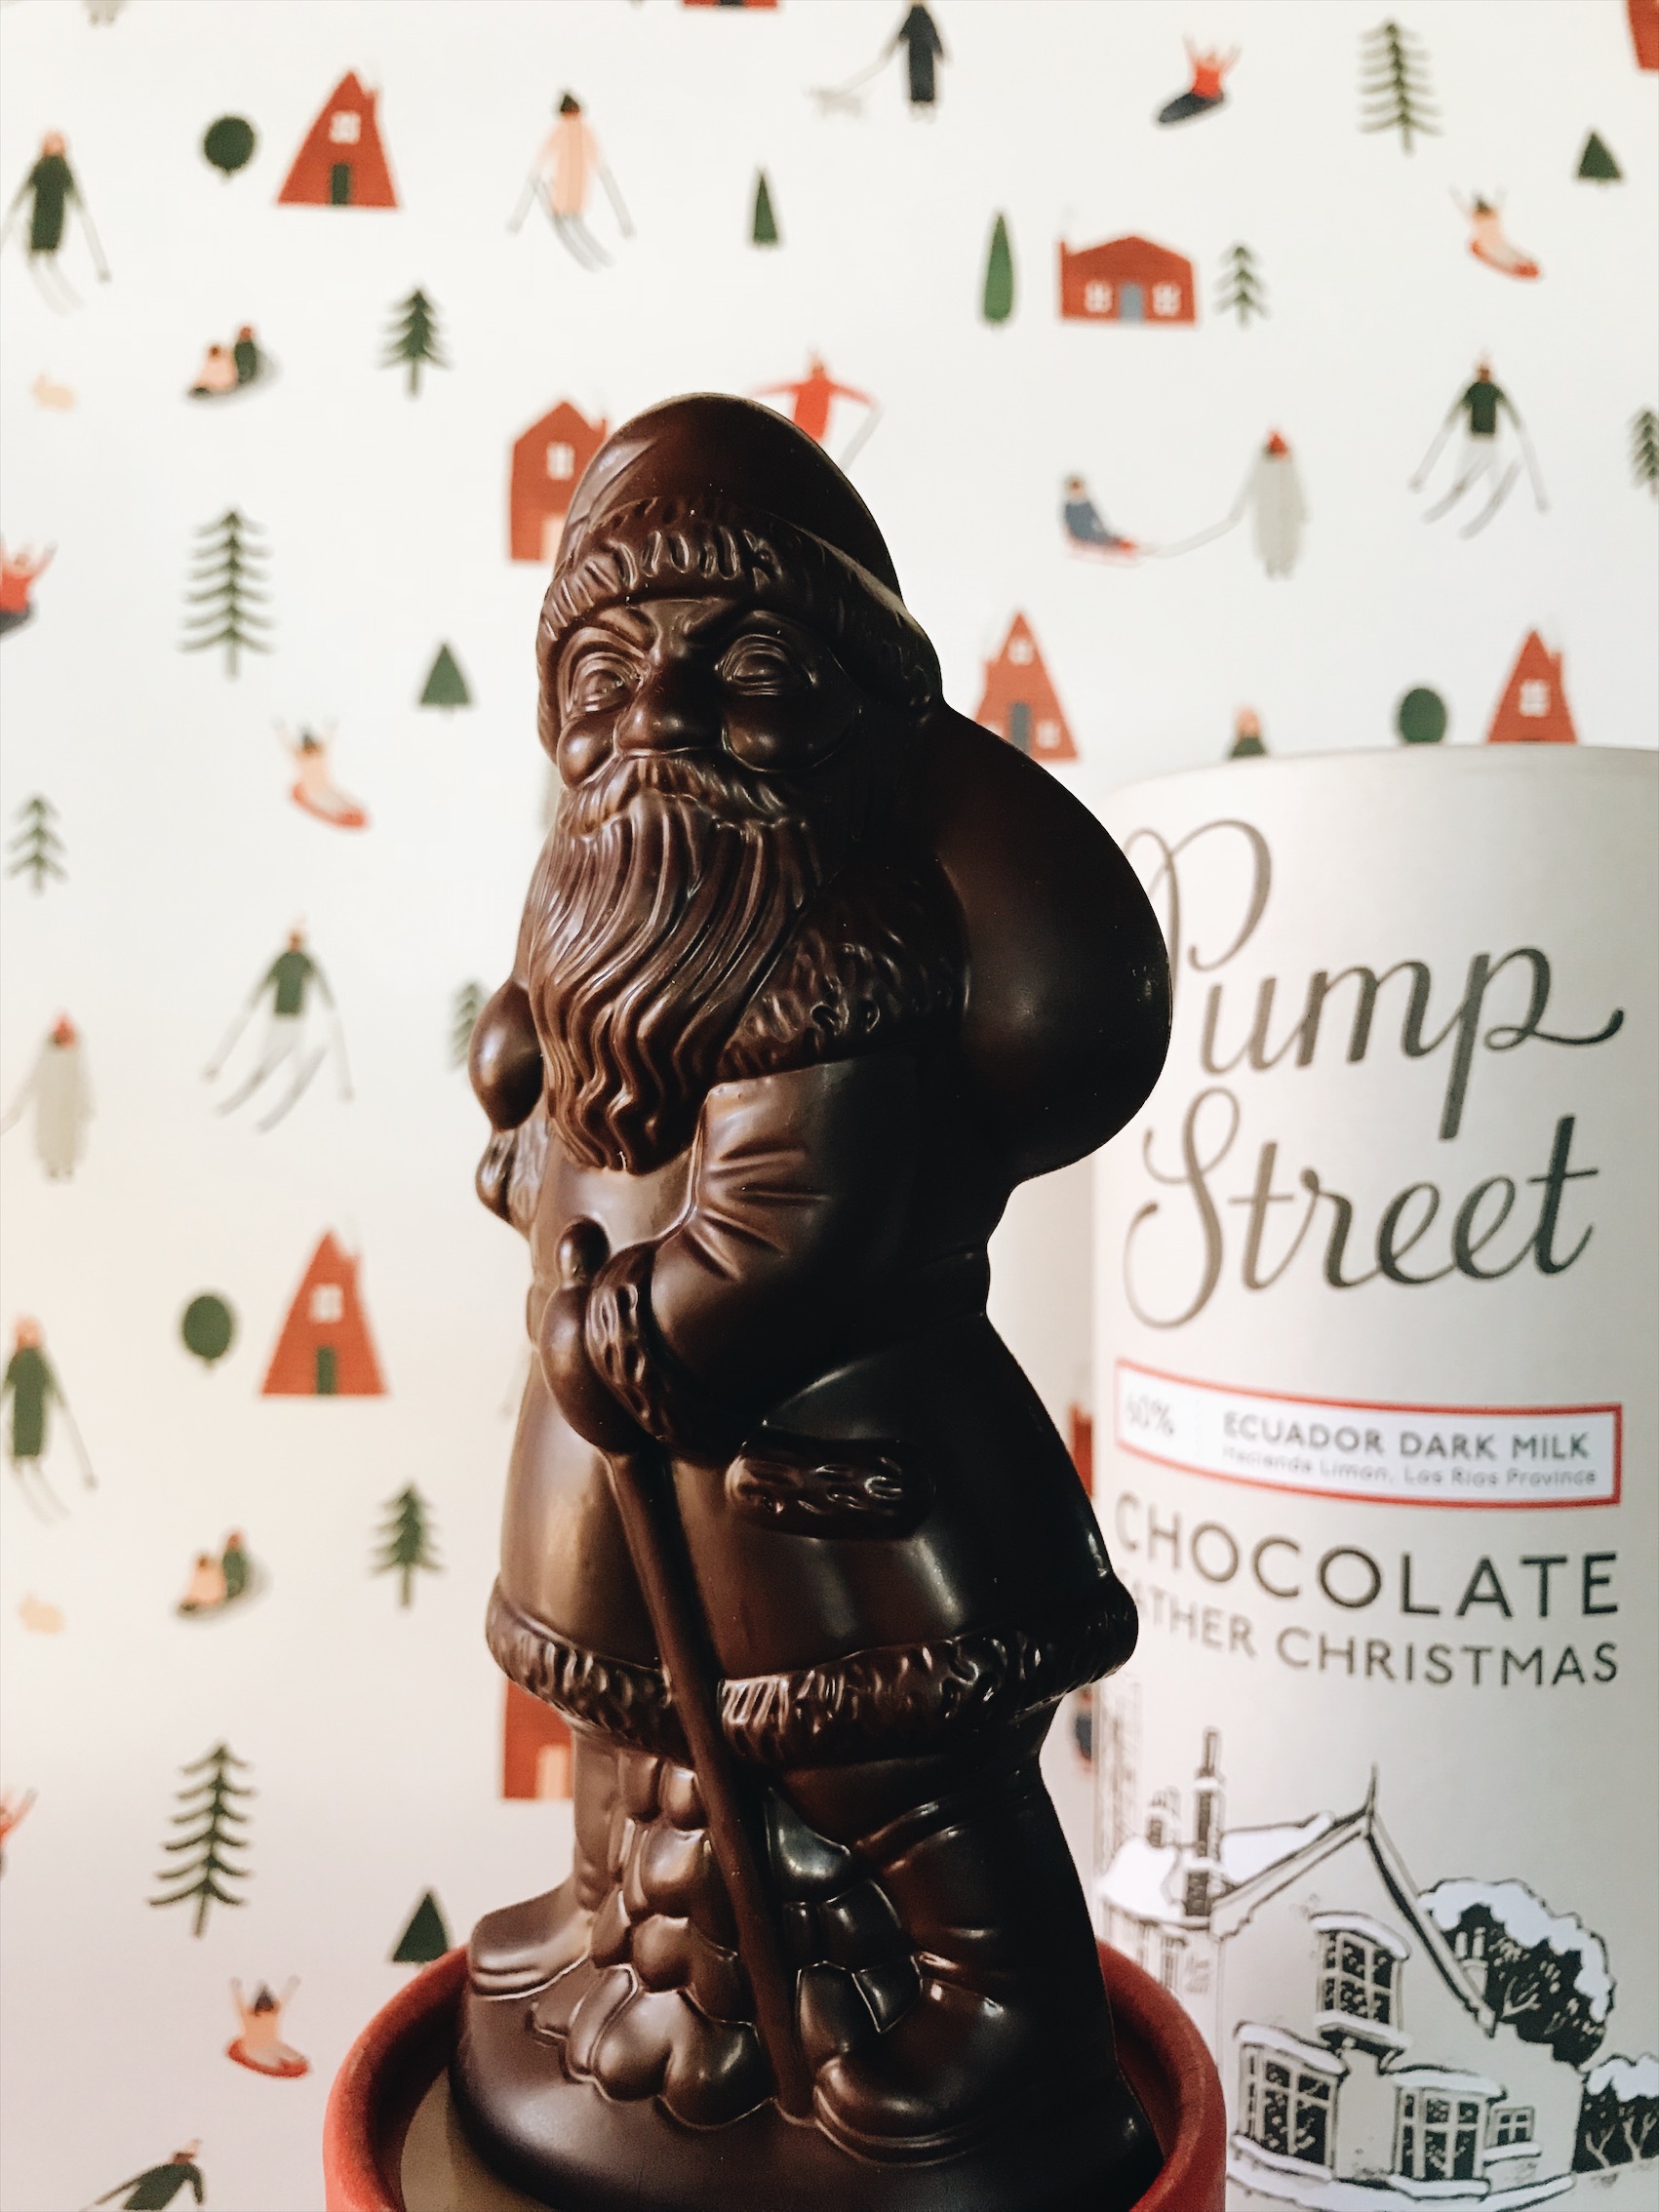 Chocolate Santa Claus (Credit: Time Market)